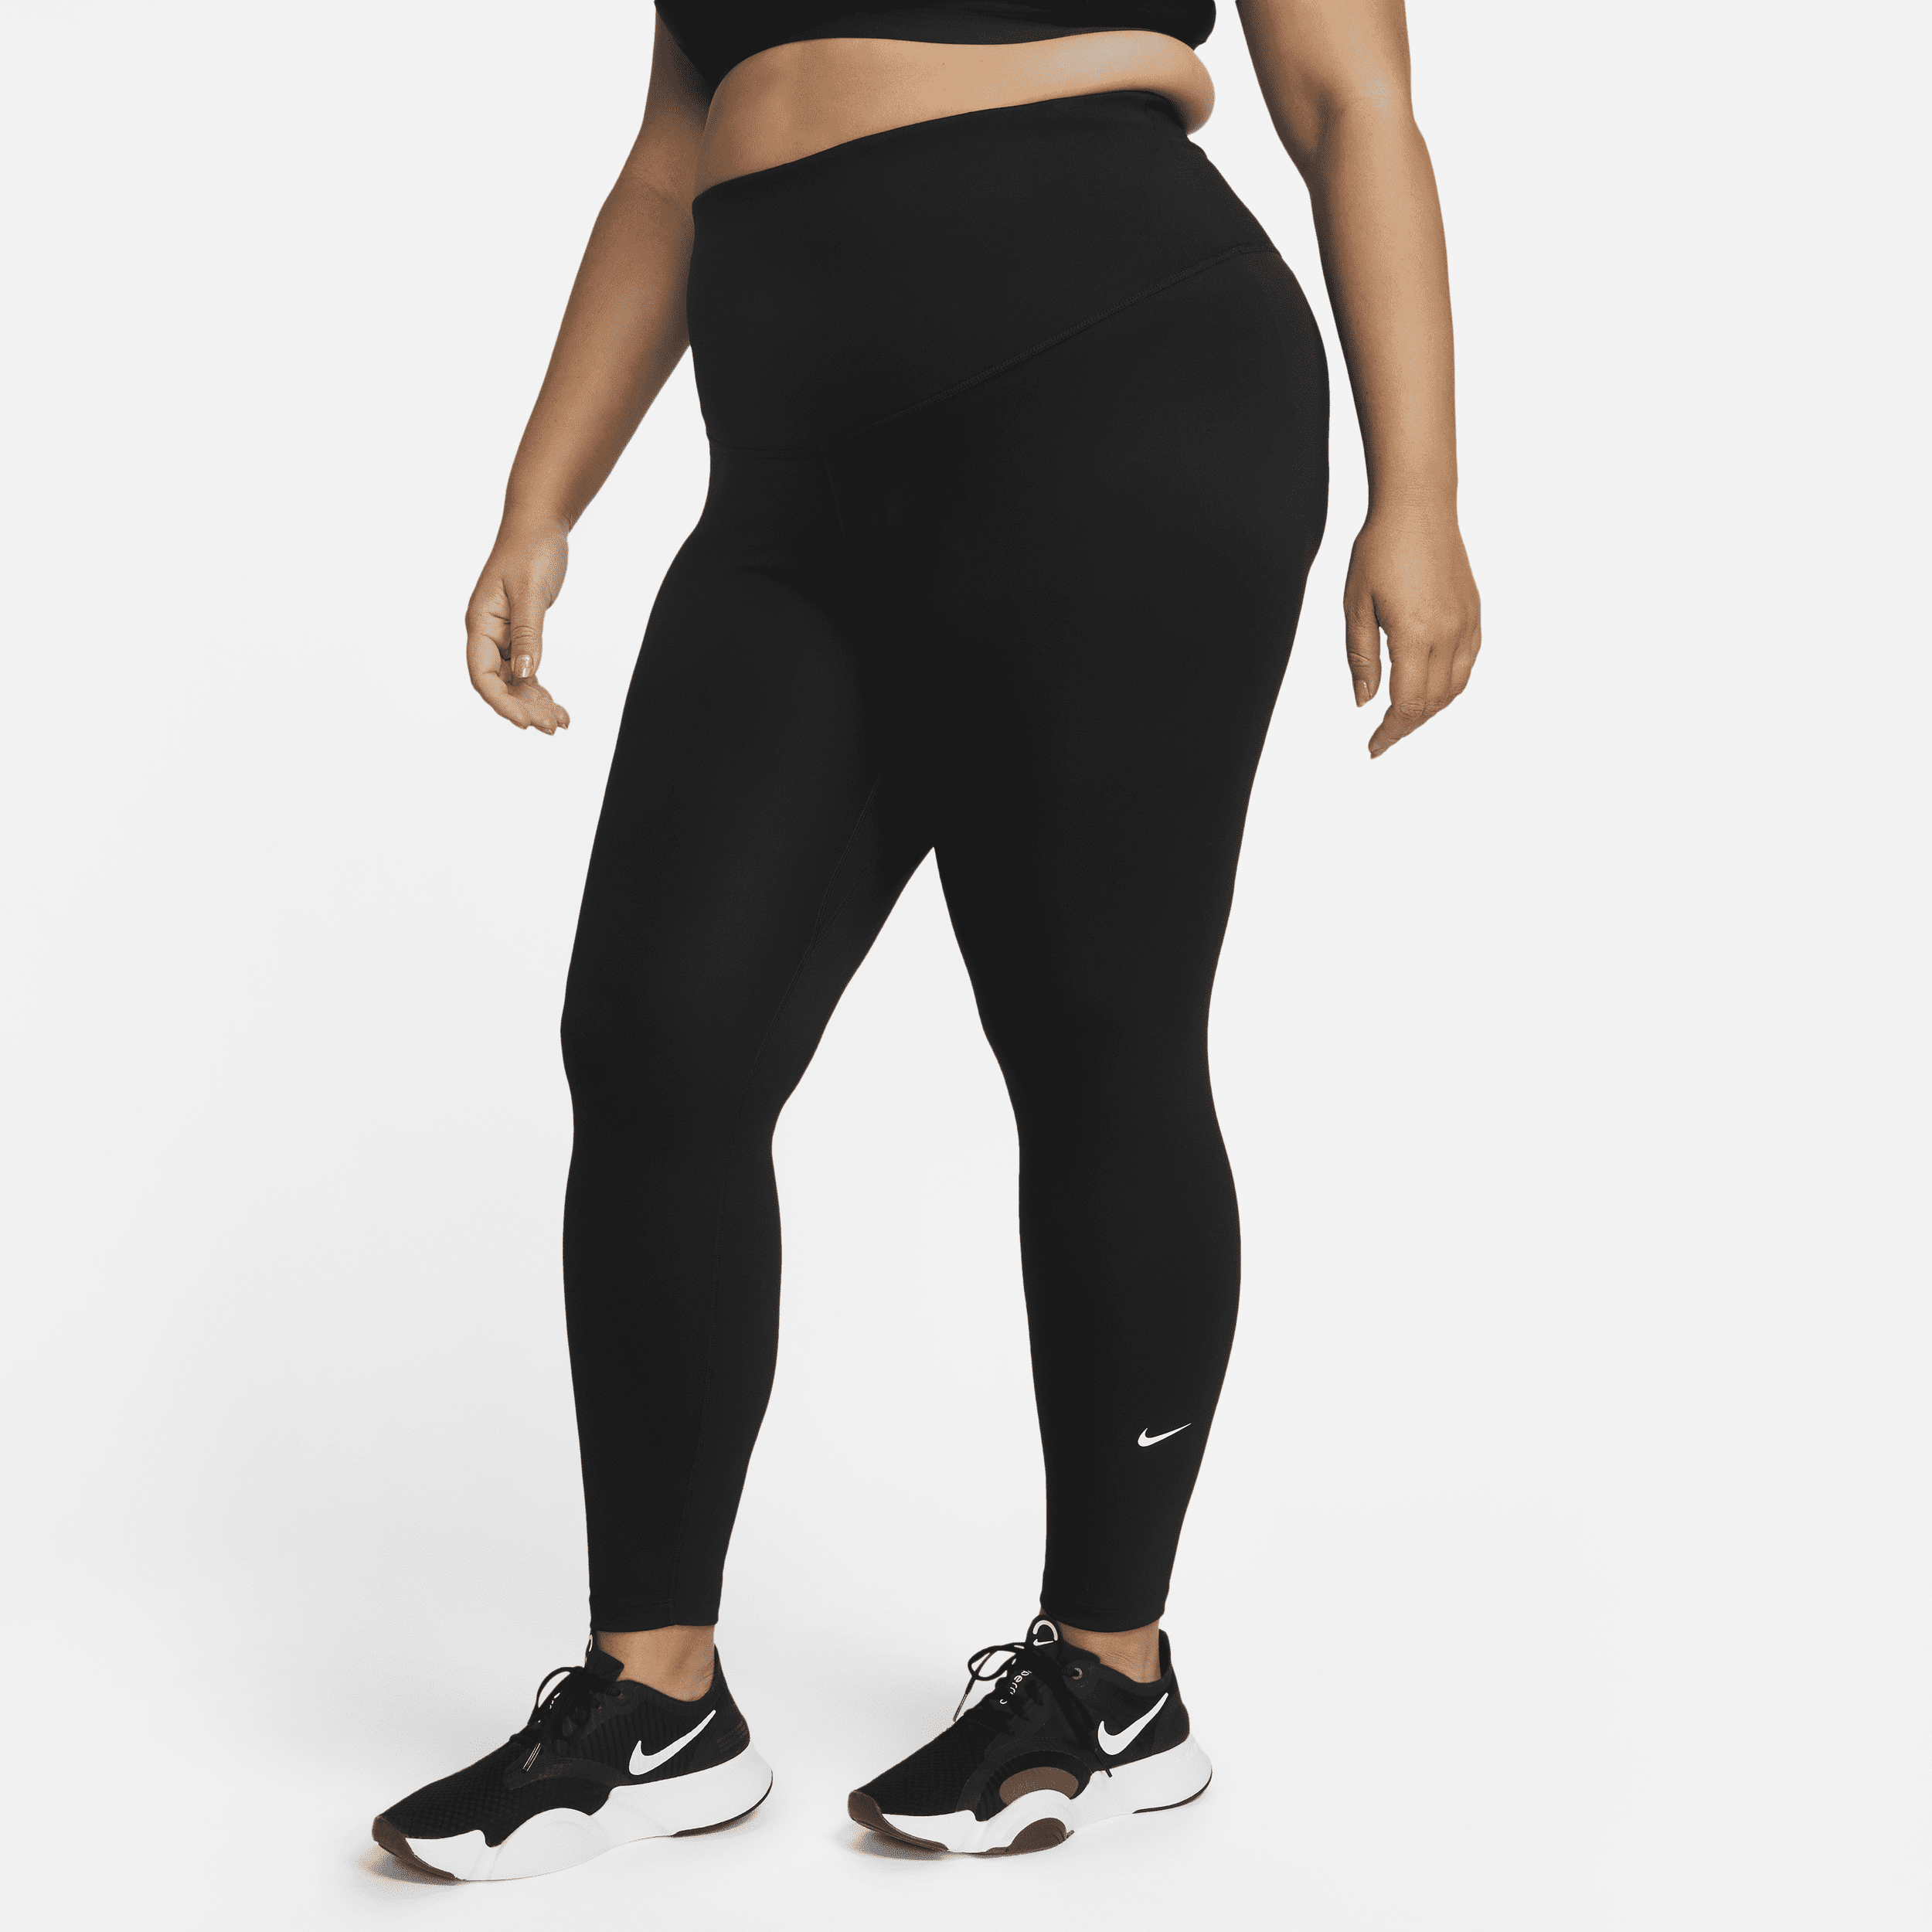 Nike One Leggings de talle alto - Mujer - Negro